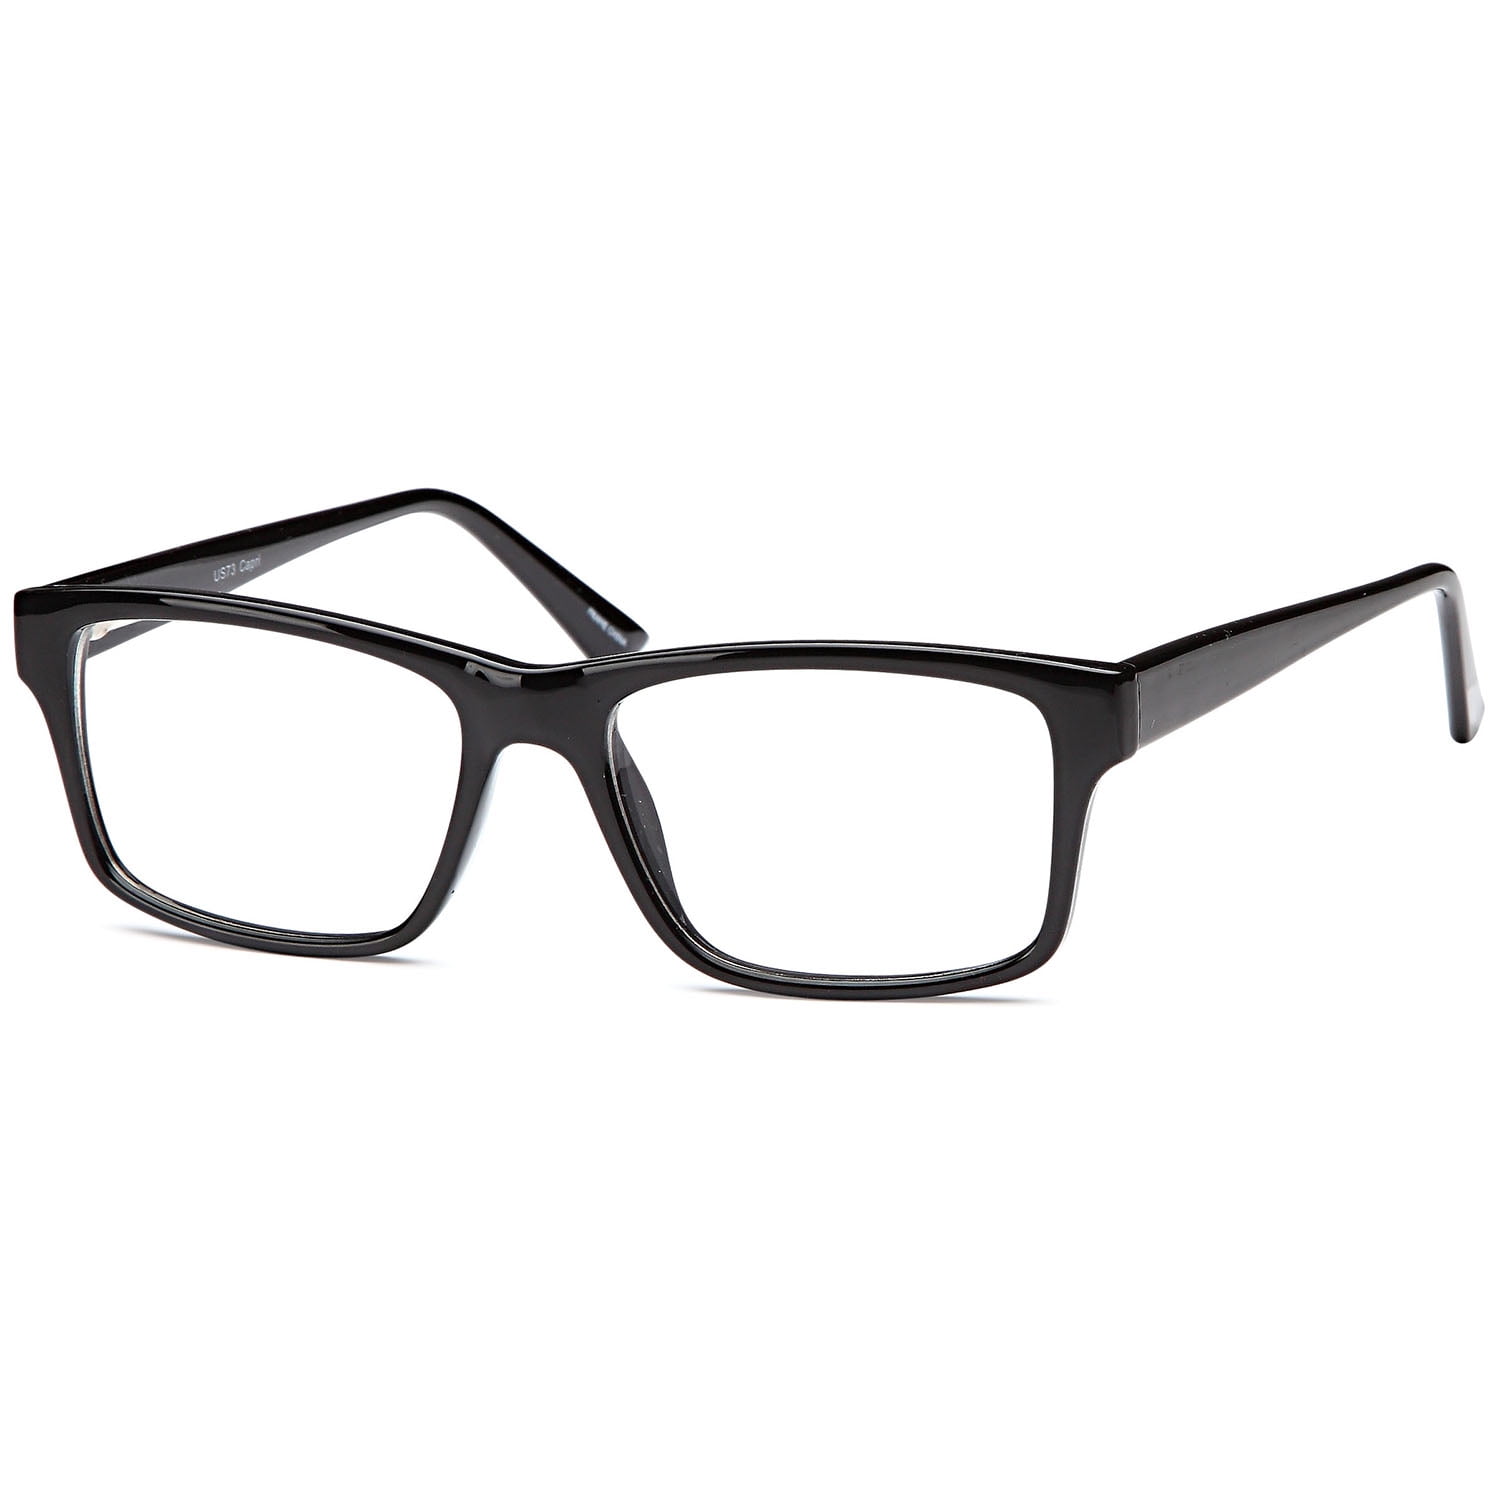 Men's Eyeglasses 53 18 145 Black Plastic - Walmart.com